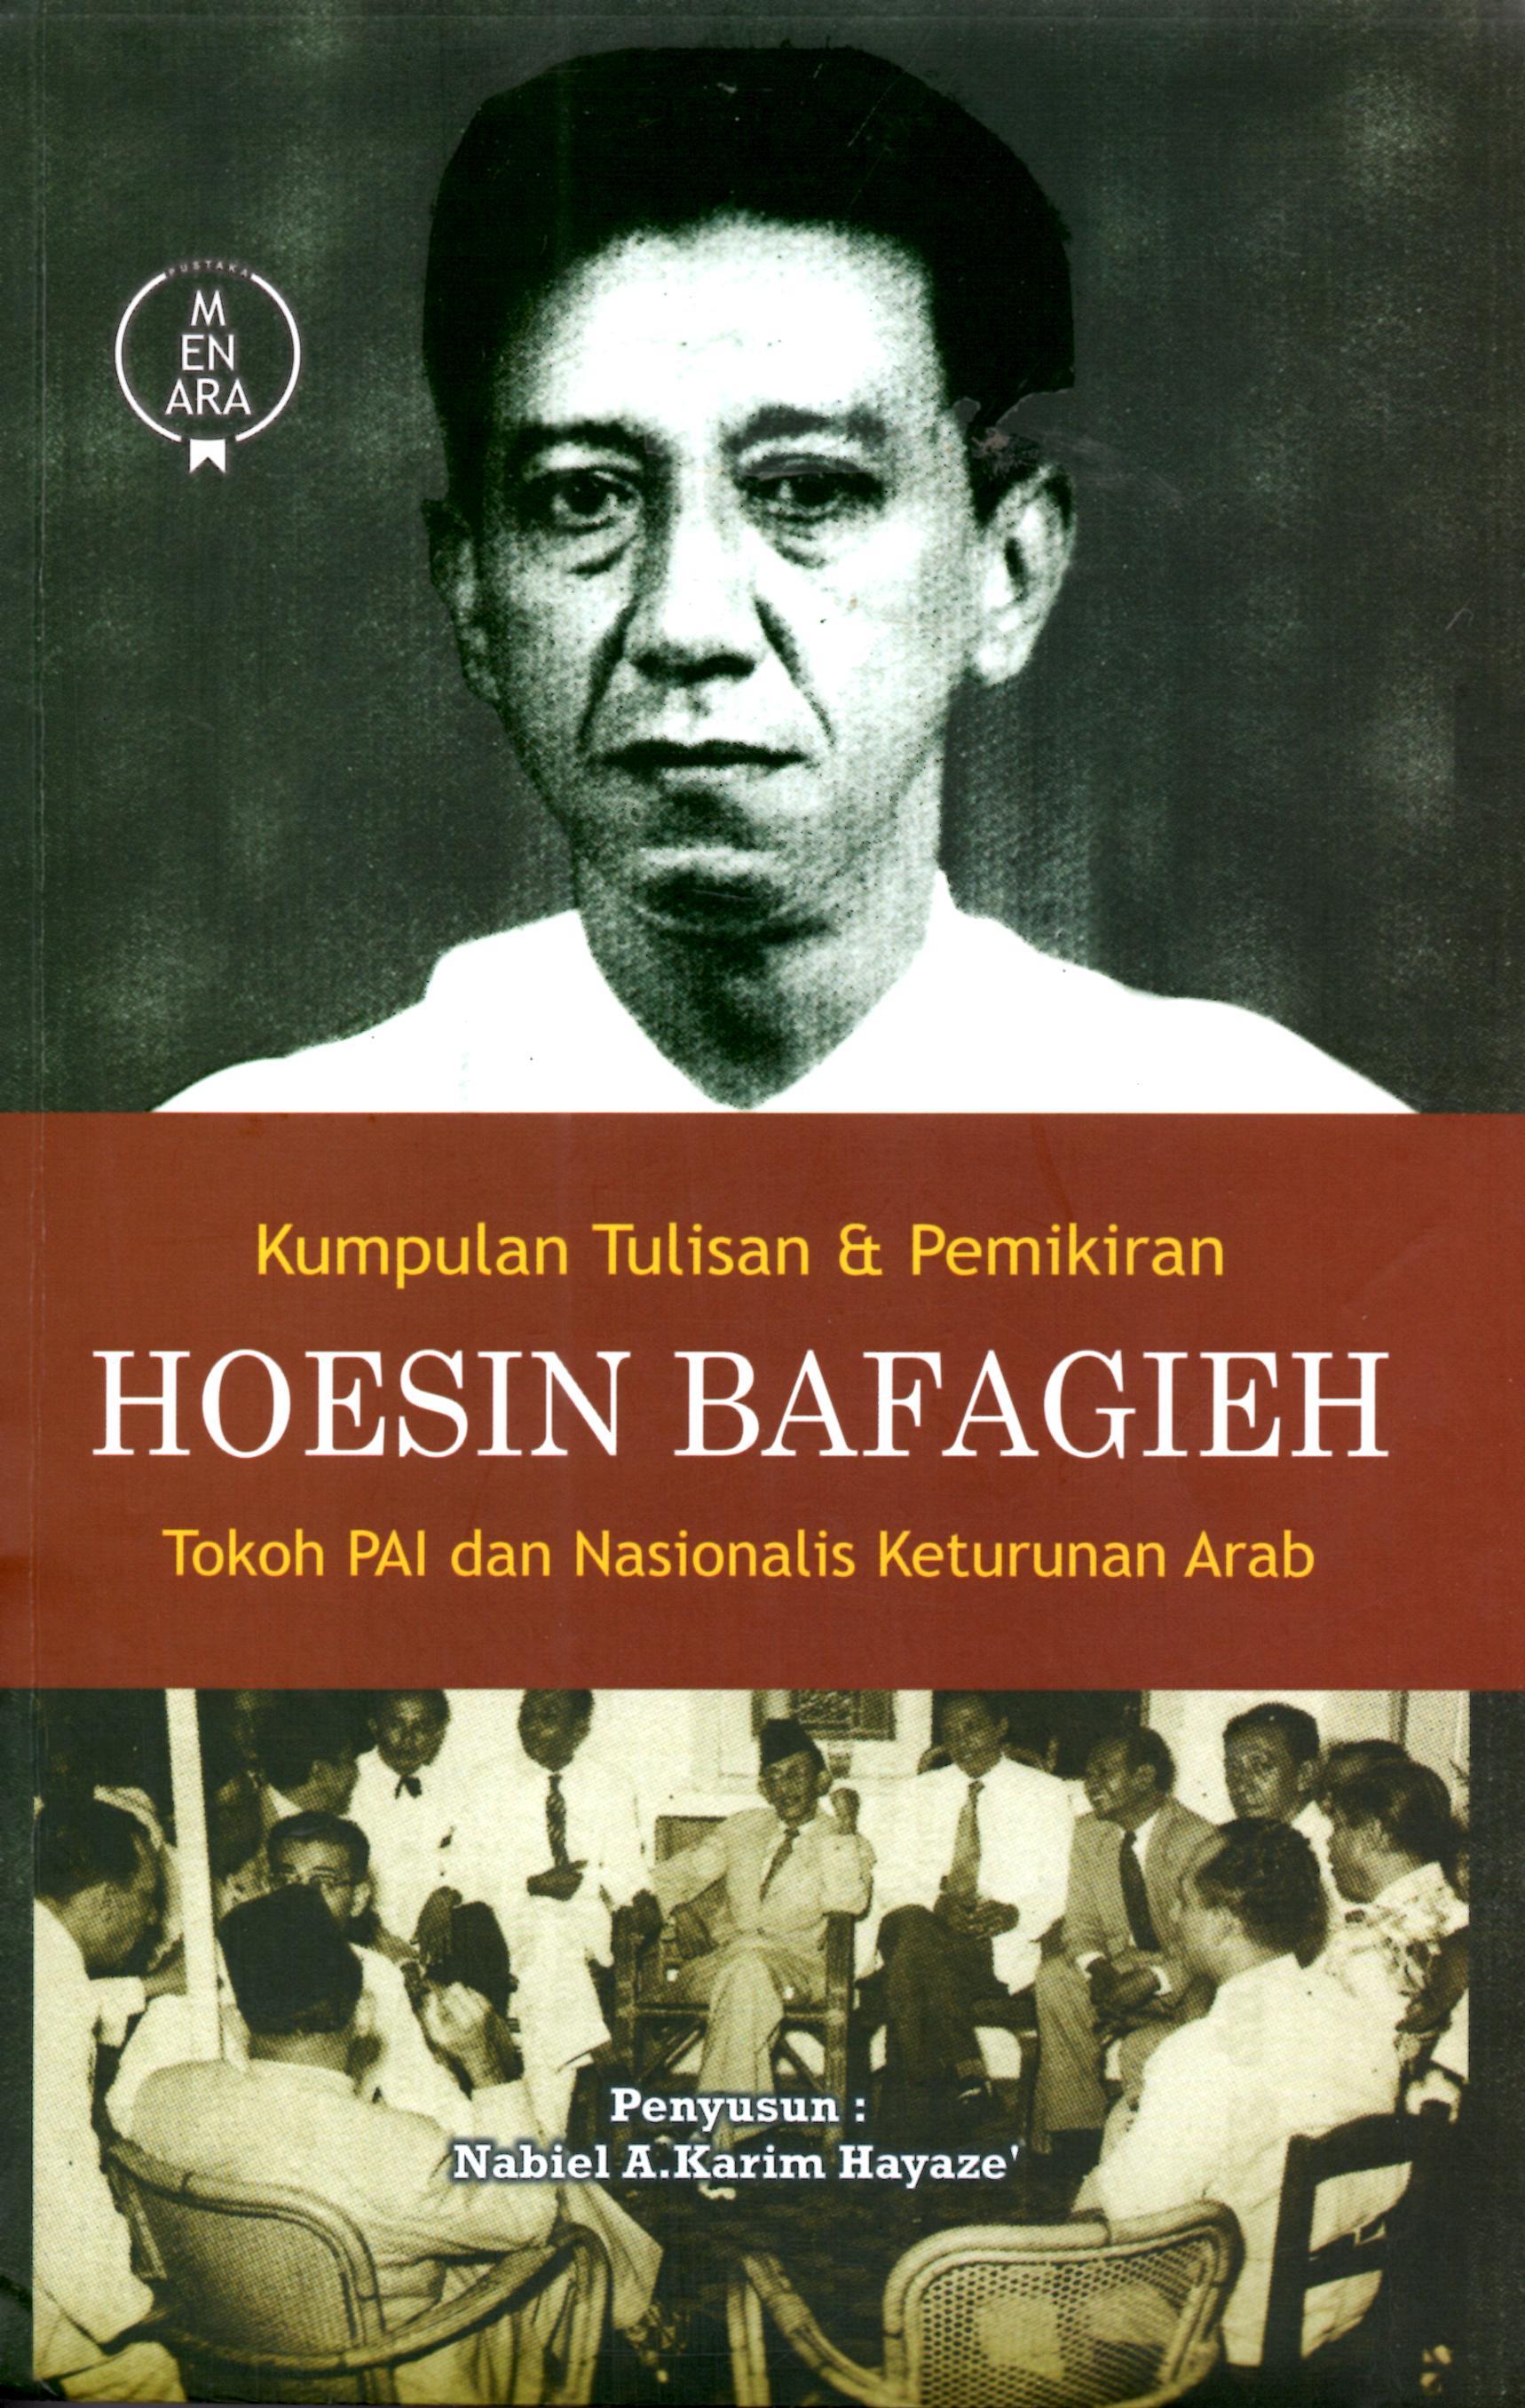 Kumpulan Tulisan & Pemikiran Hosein Bafagih, Tokoh PAI dan Nasionalis Keturunan Arab